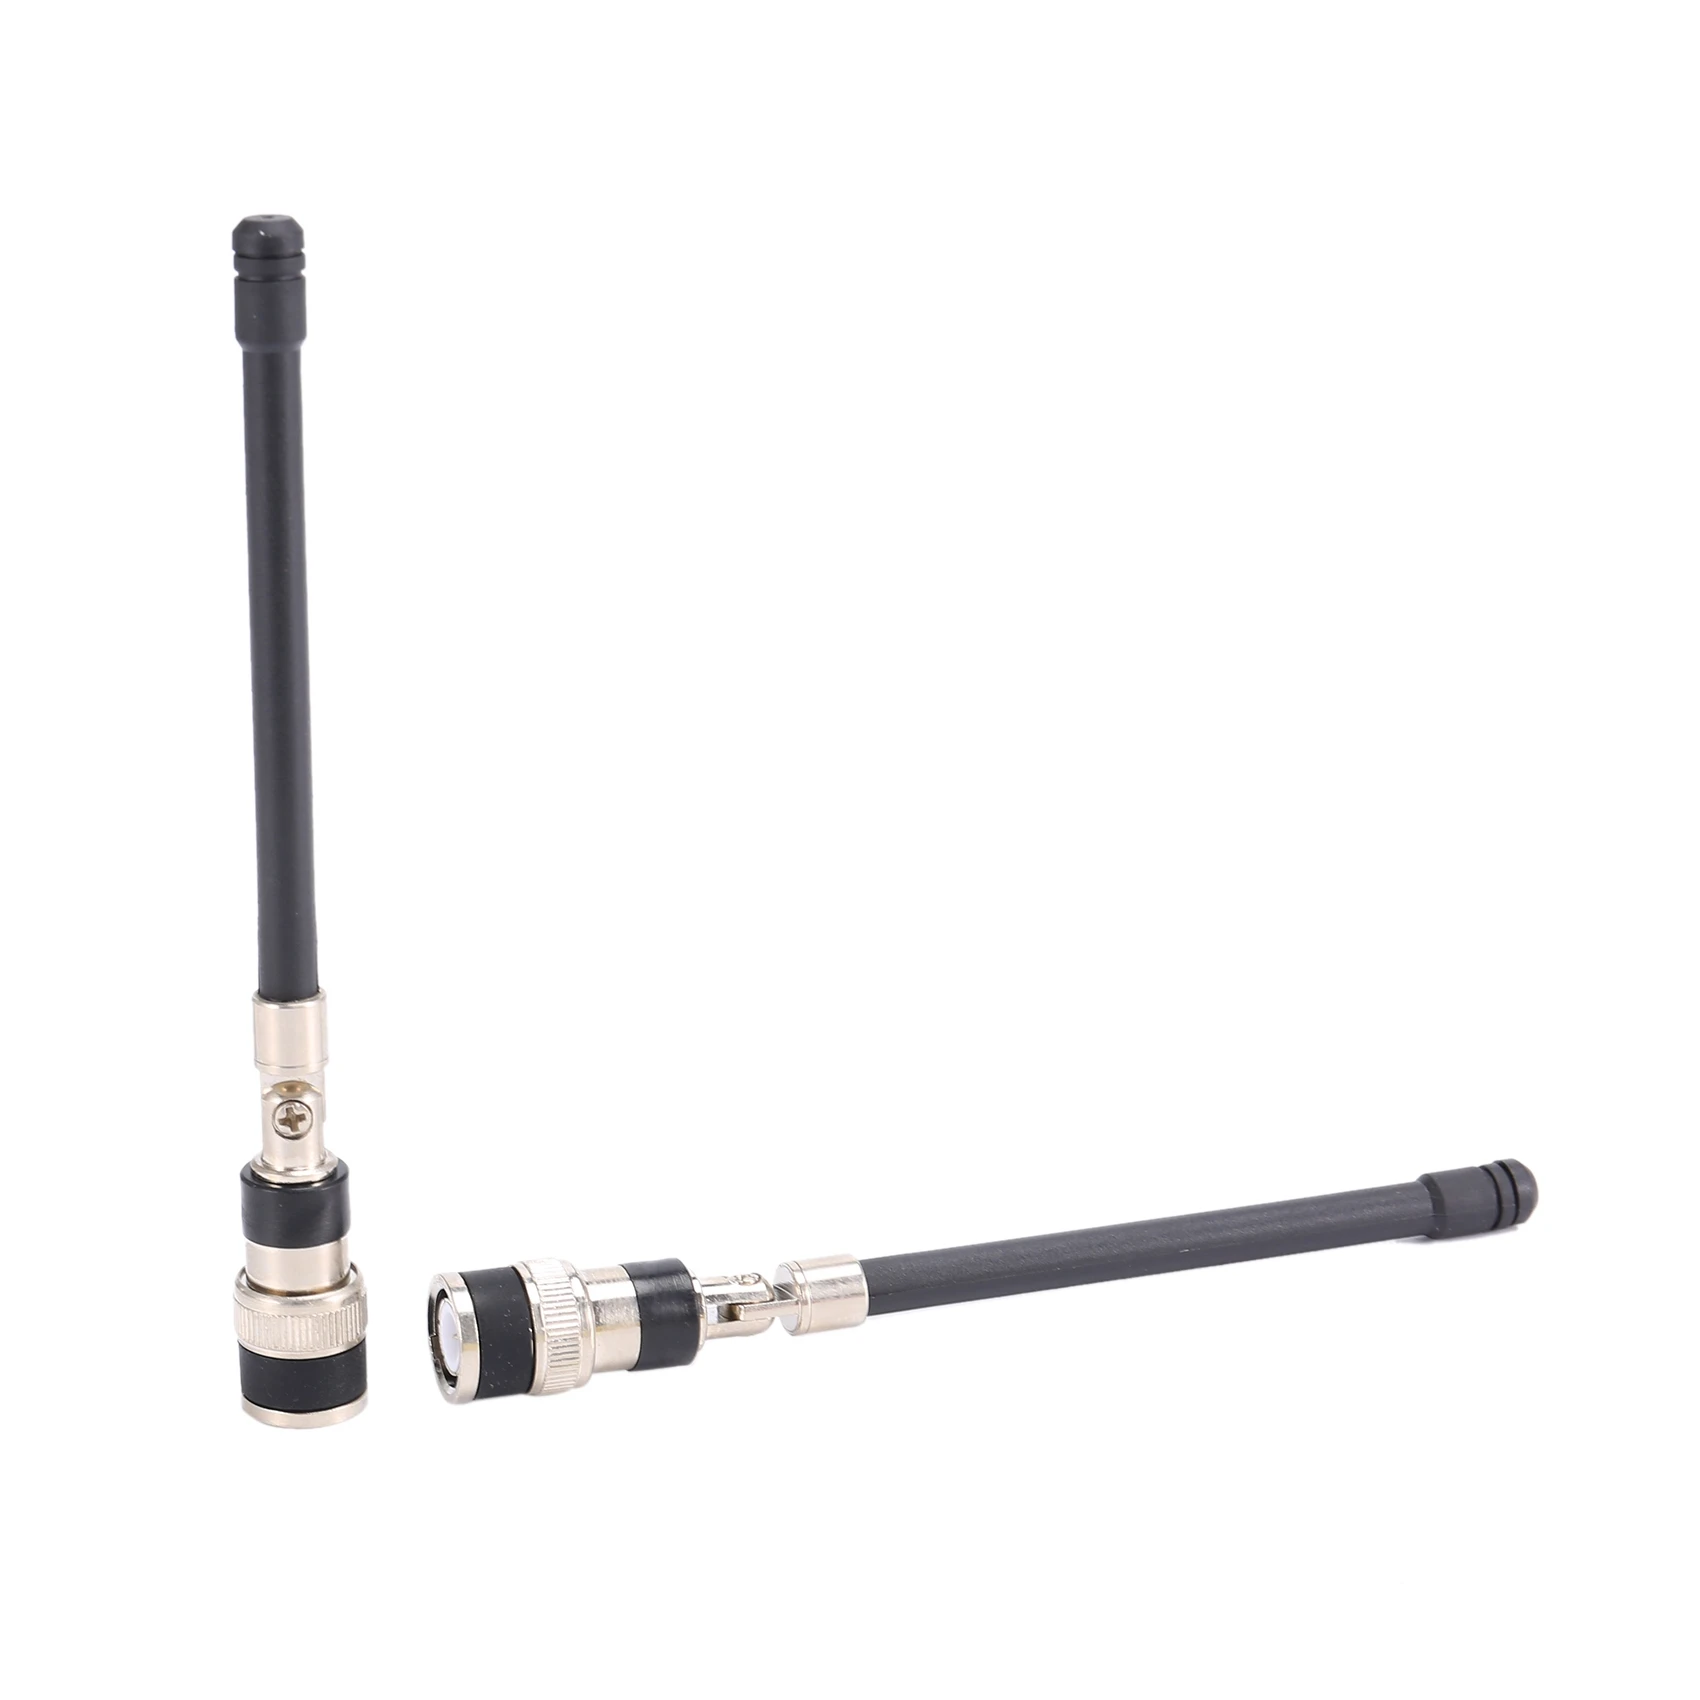 

2 PCS BNC UHF Microphone Antenna for Shure PGX24 SLX24 SLX4 PG58 SM58 BETA58 Series Wireless Mic